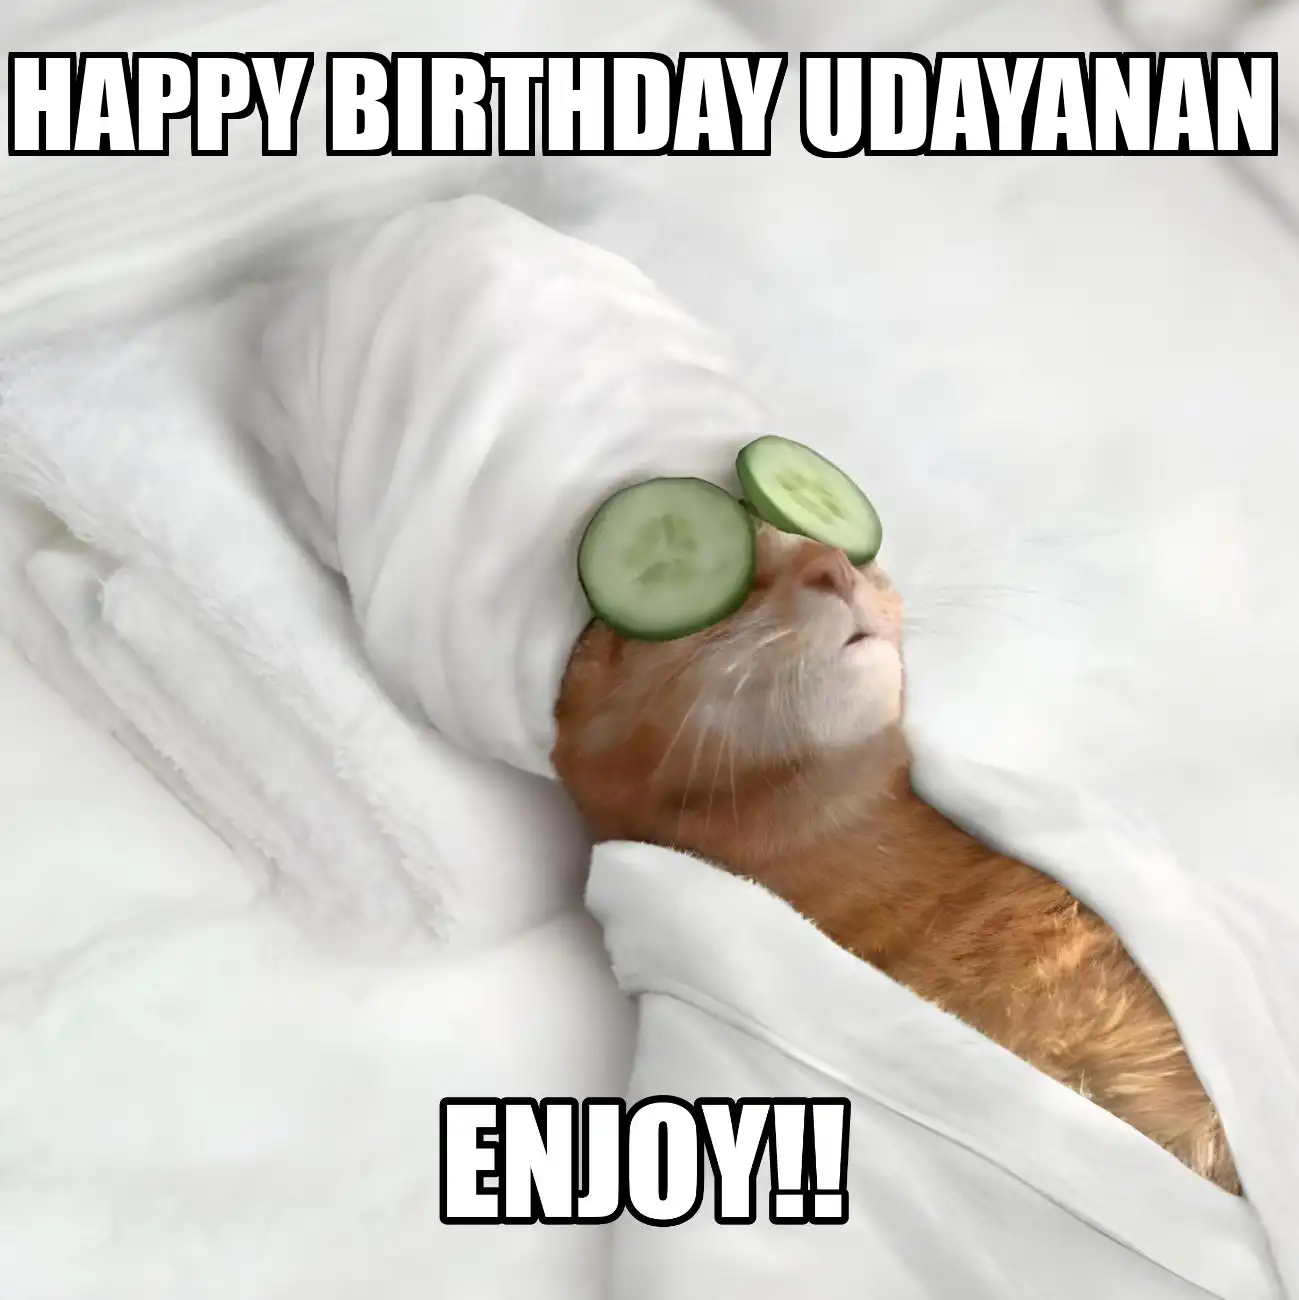 Happy Birthday Udayanan Enjoy Cat Meme